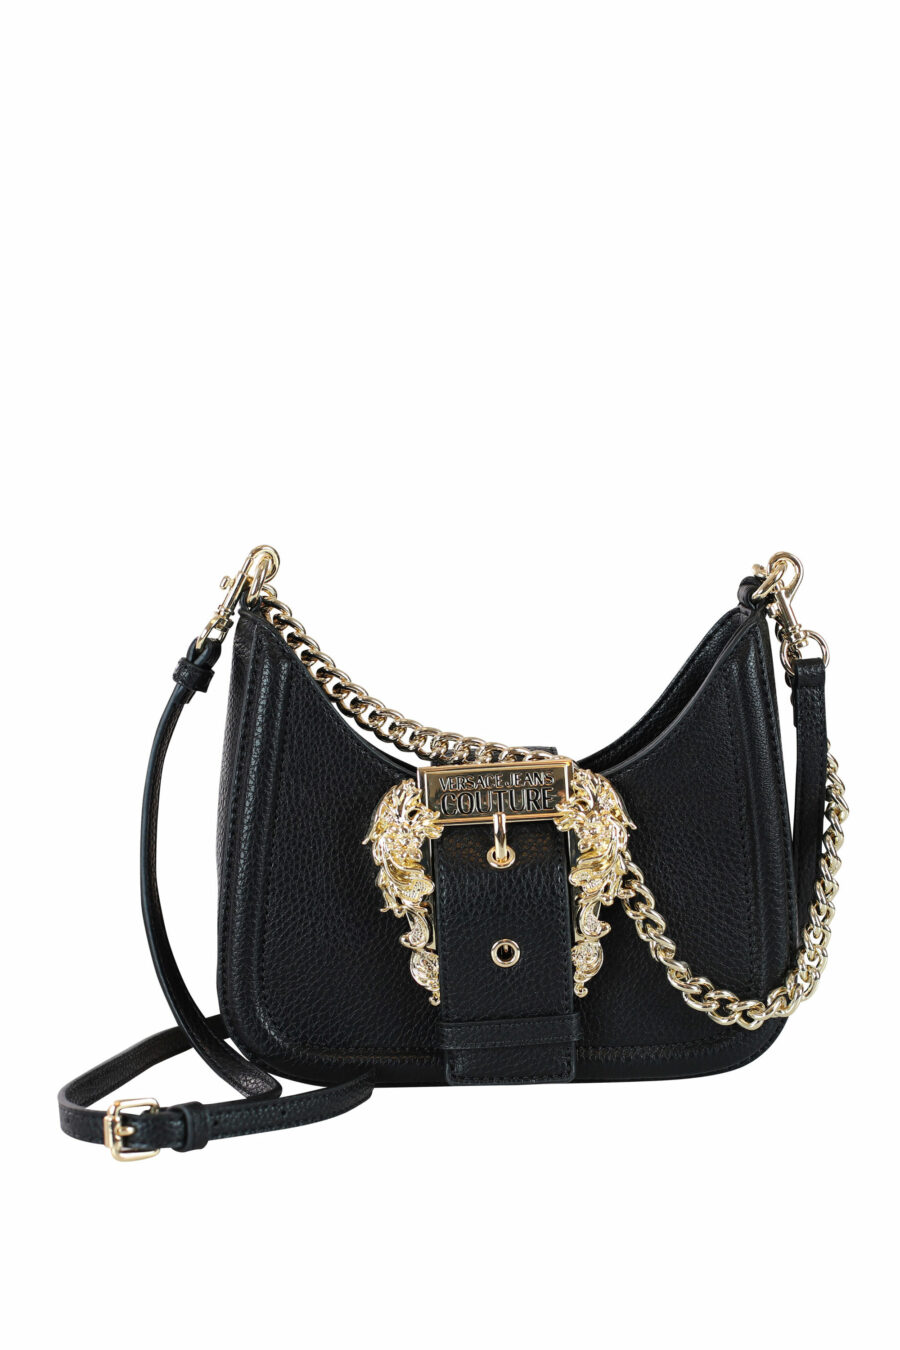 Black hobo style shoulder bag with baroque buckle - IMG 0090